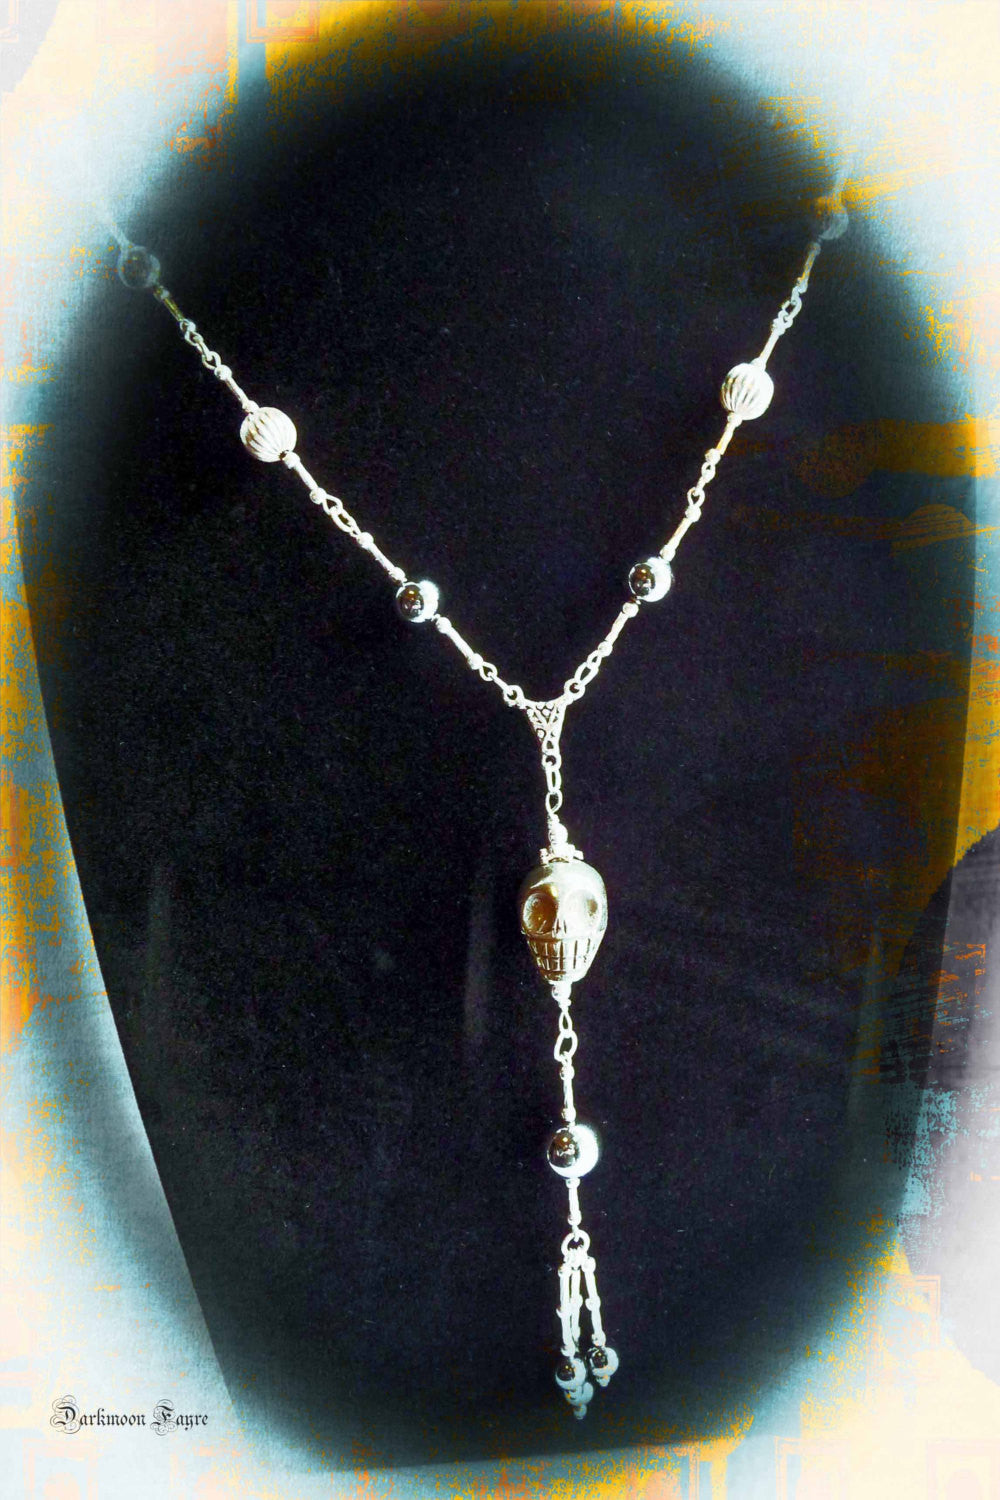 Day Of The Dead Necklace. Skull Rosary. Día de los Muertos. Hand Wired Silver Hematite Rosary Chain - Darkmoon Fayre